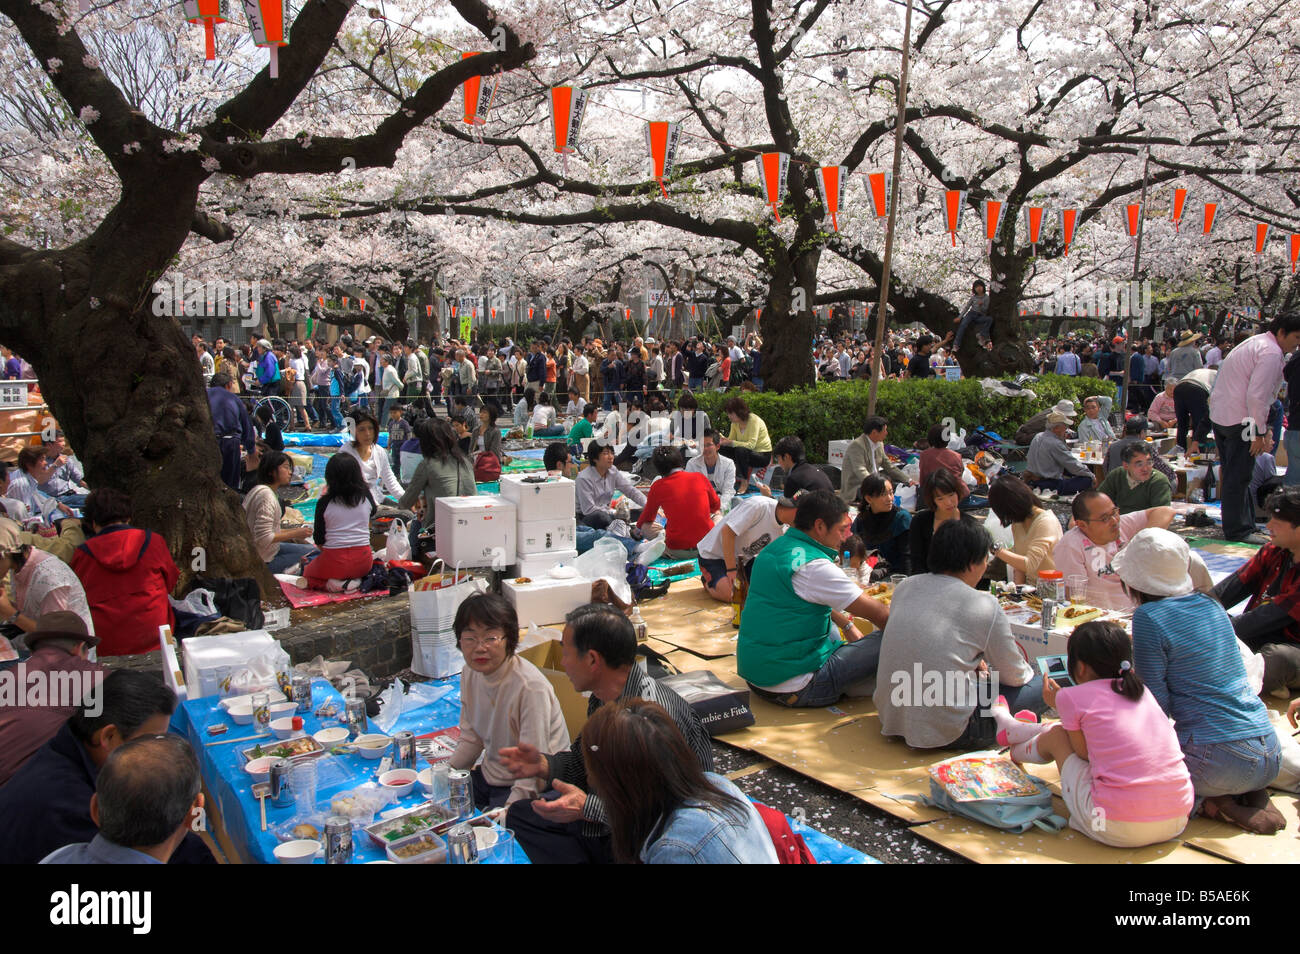 Groups of people having picnic under trees, Cherry Blossom festival, Sakura, Ueno koen, Tokyo, Honshu, Japan Stock Photo